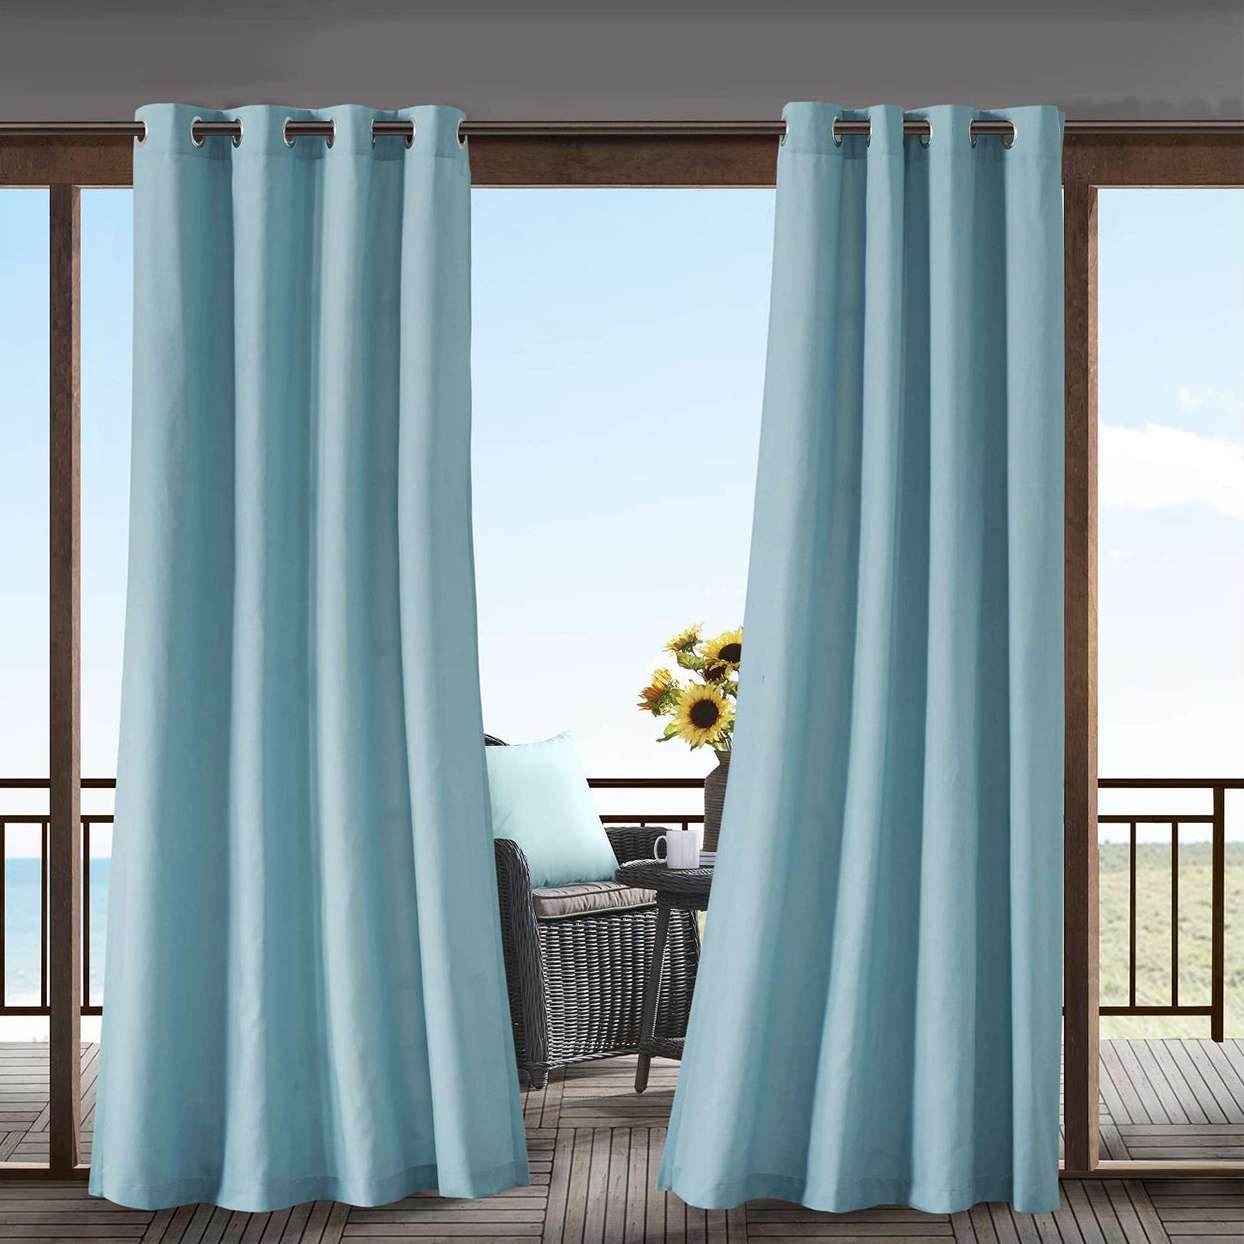 light blue outdoor curtains on deck